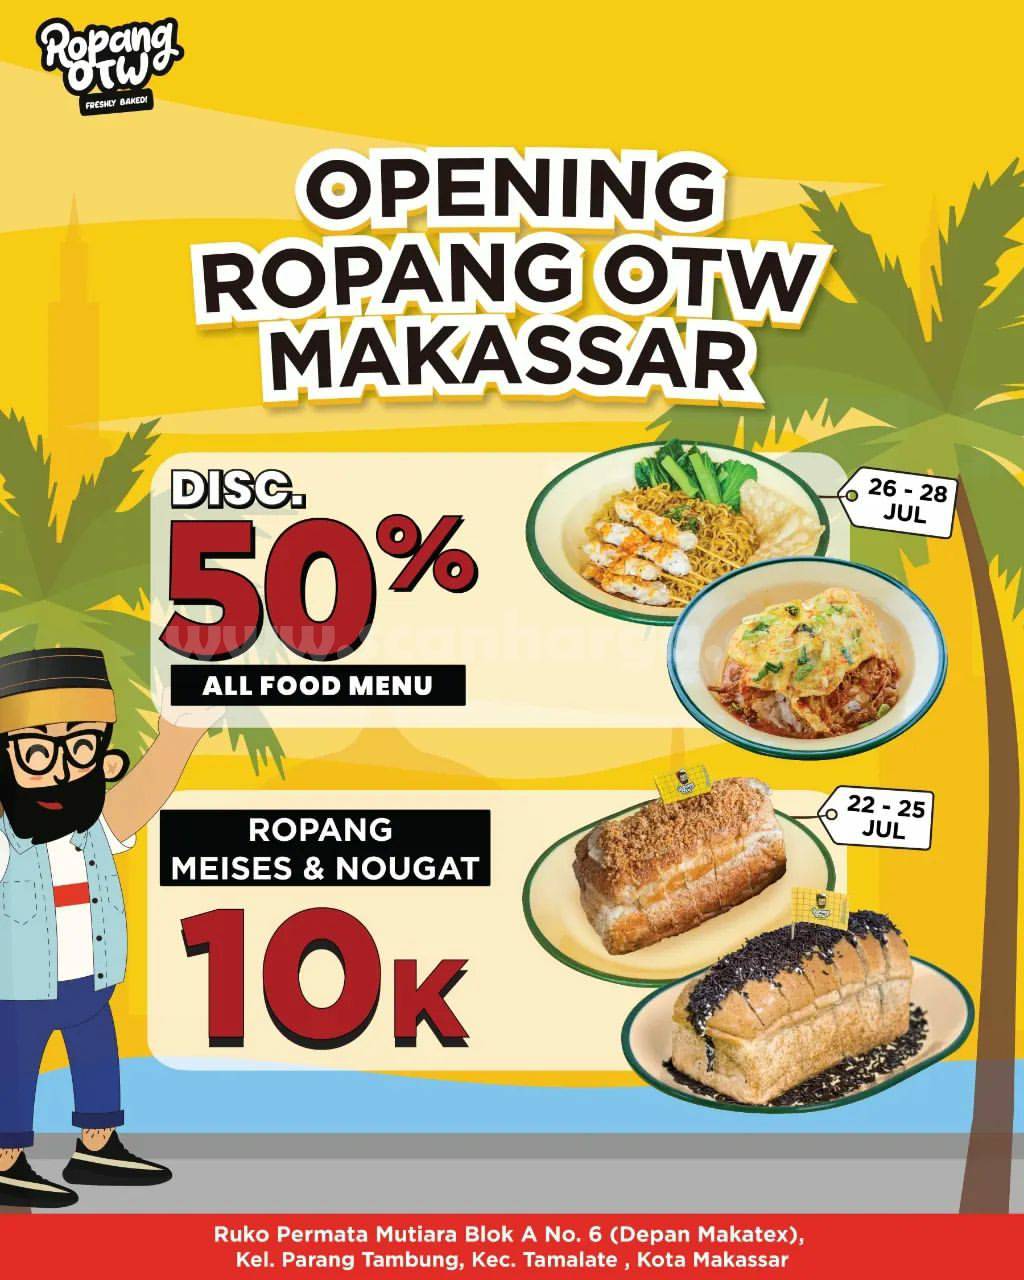 Ropang OTW Makassar Opening Promo Diskon 50% Semua Menu